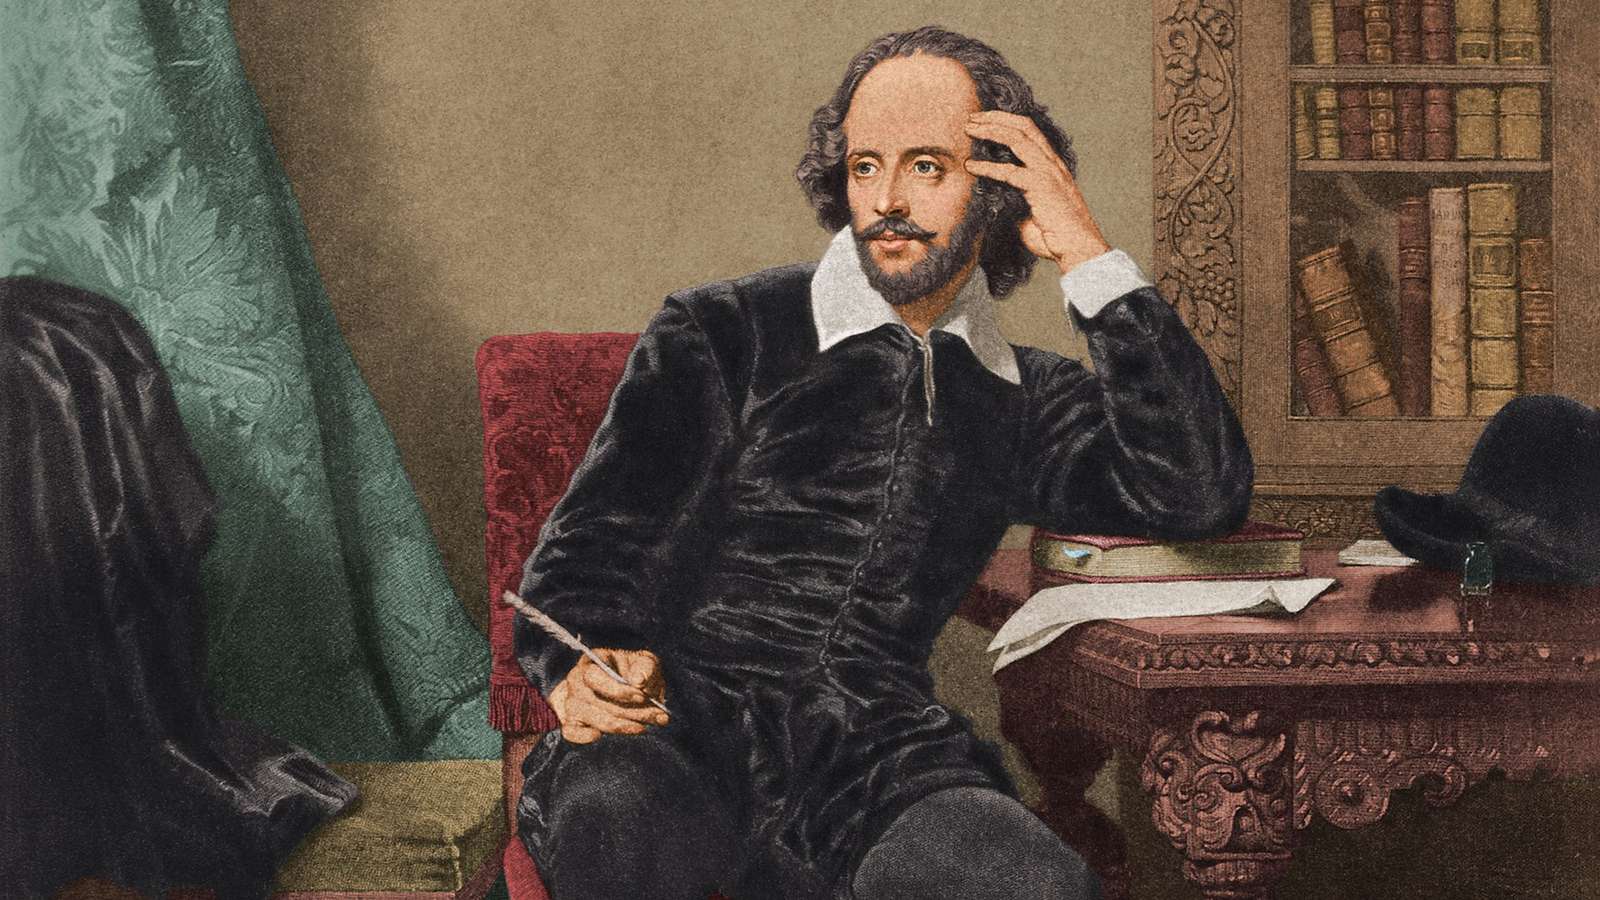 William Shakespeare pussel online från foto